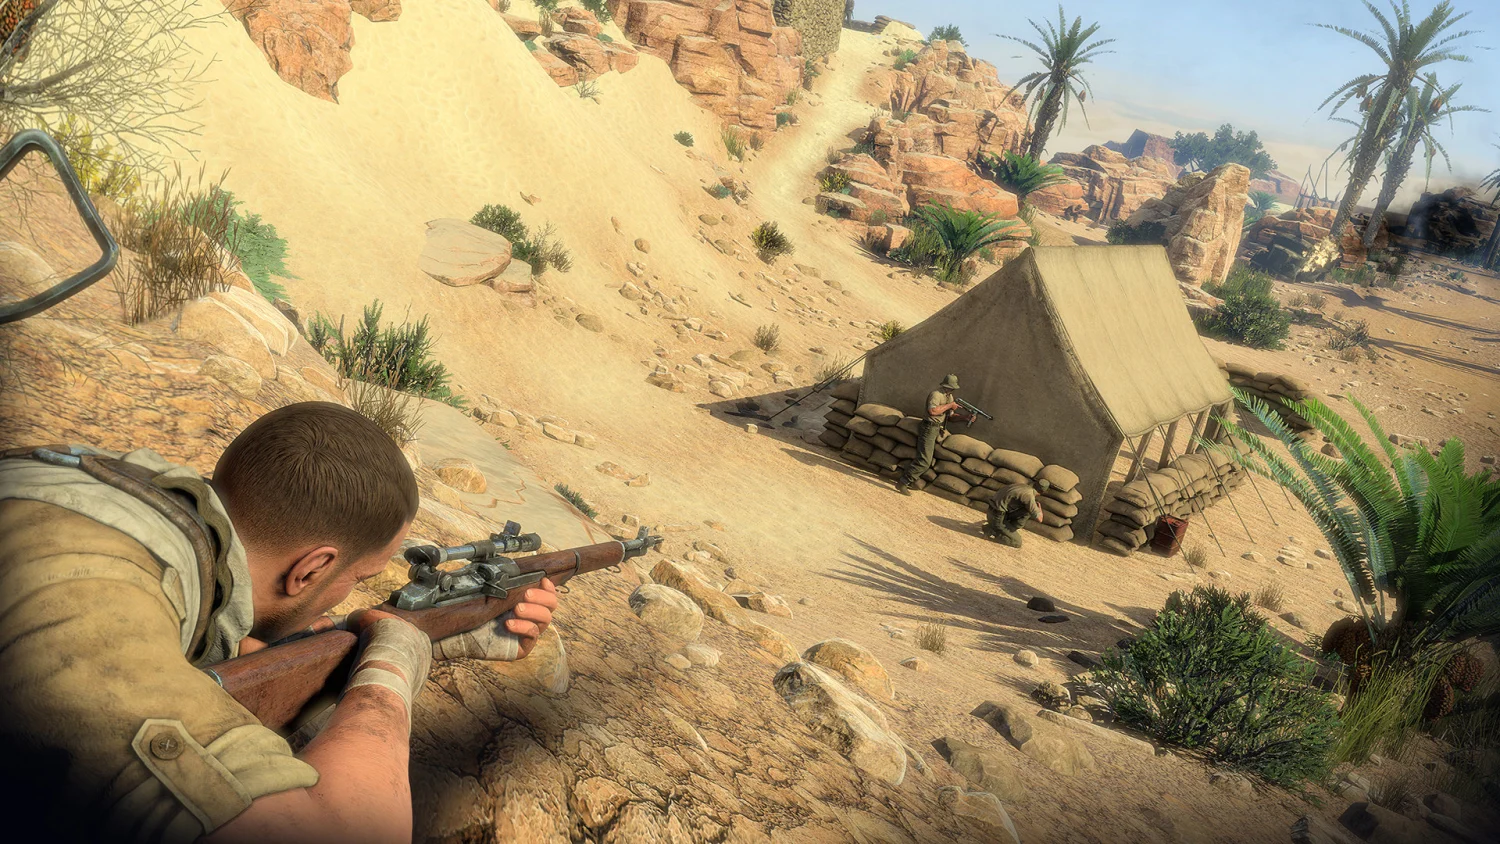 Jogo Sniper Elite III Ultimate Edition PS4